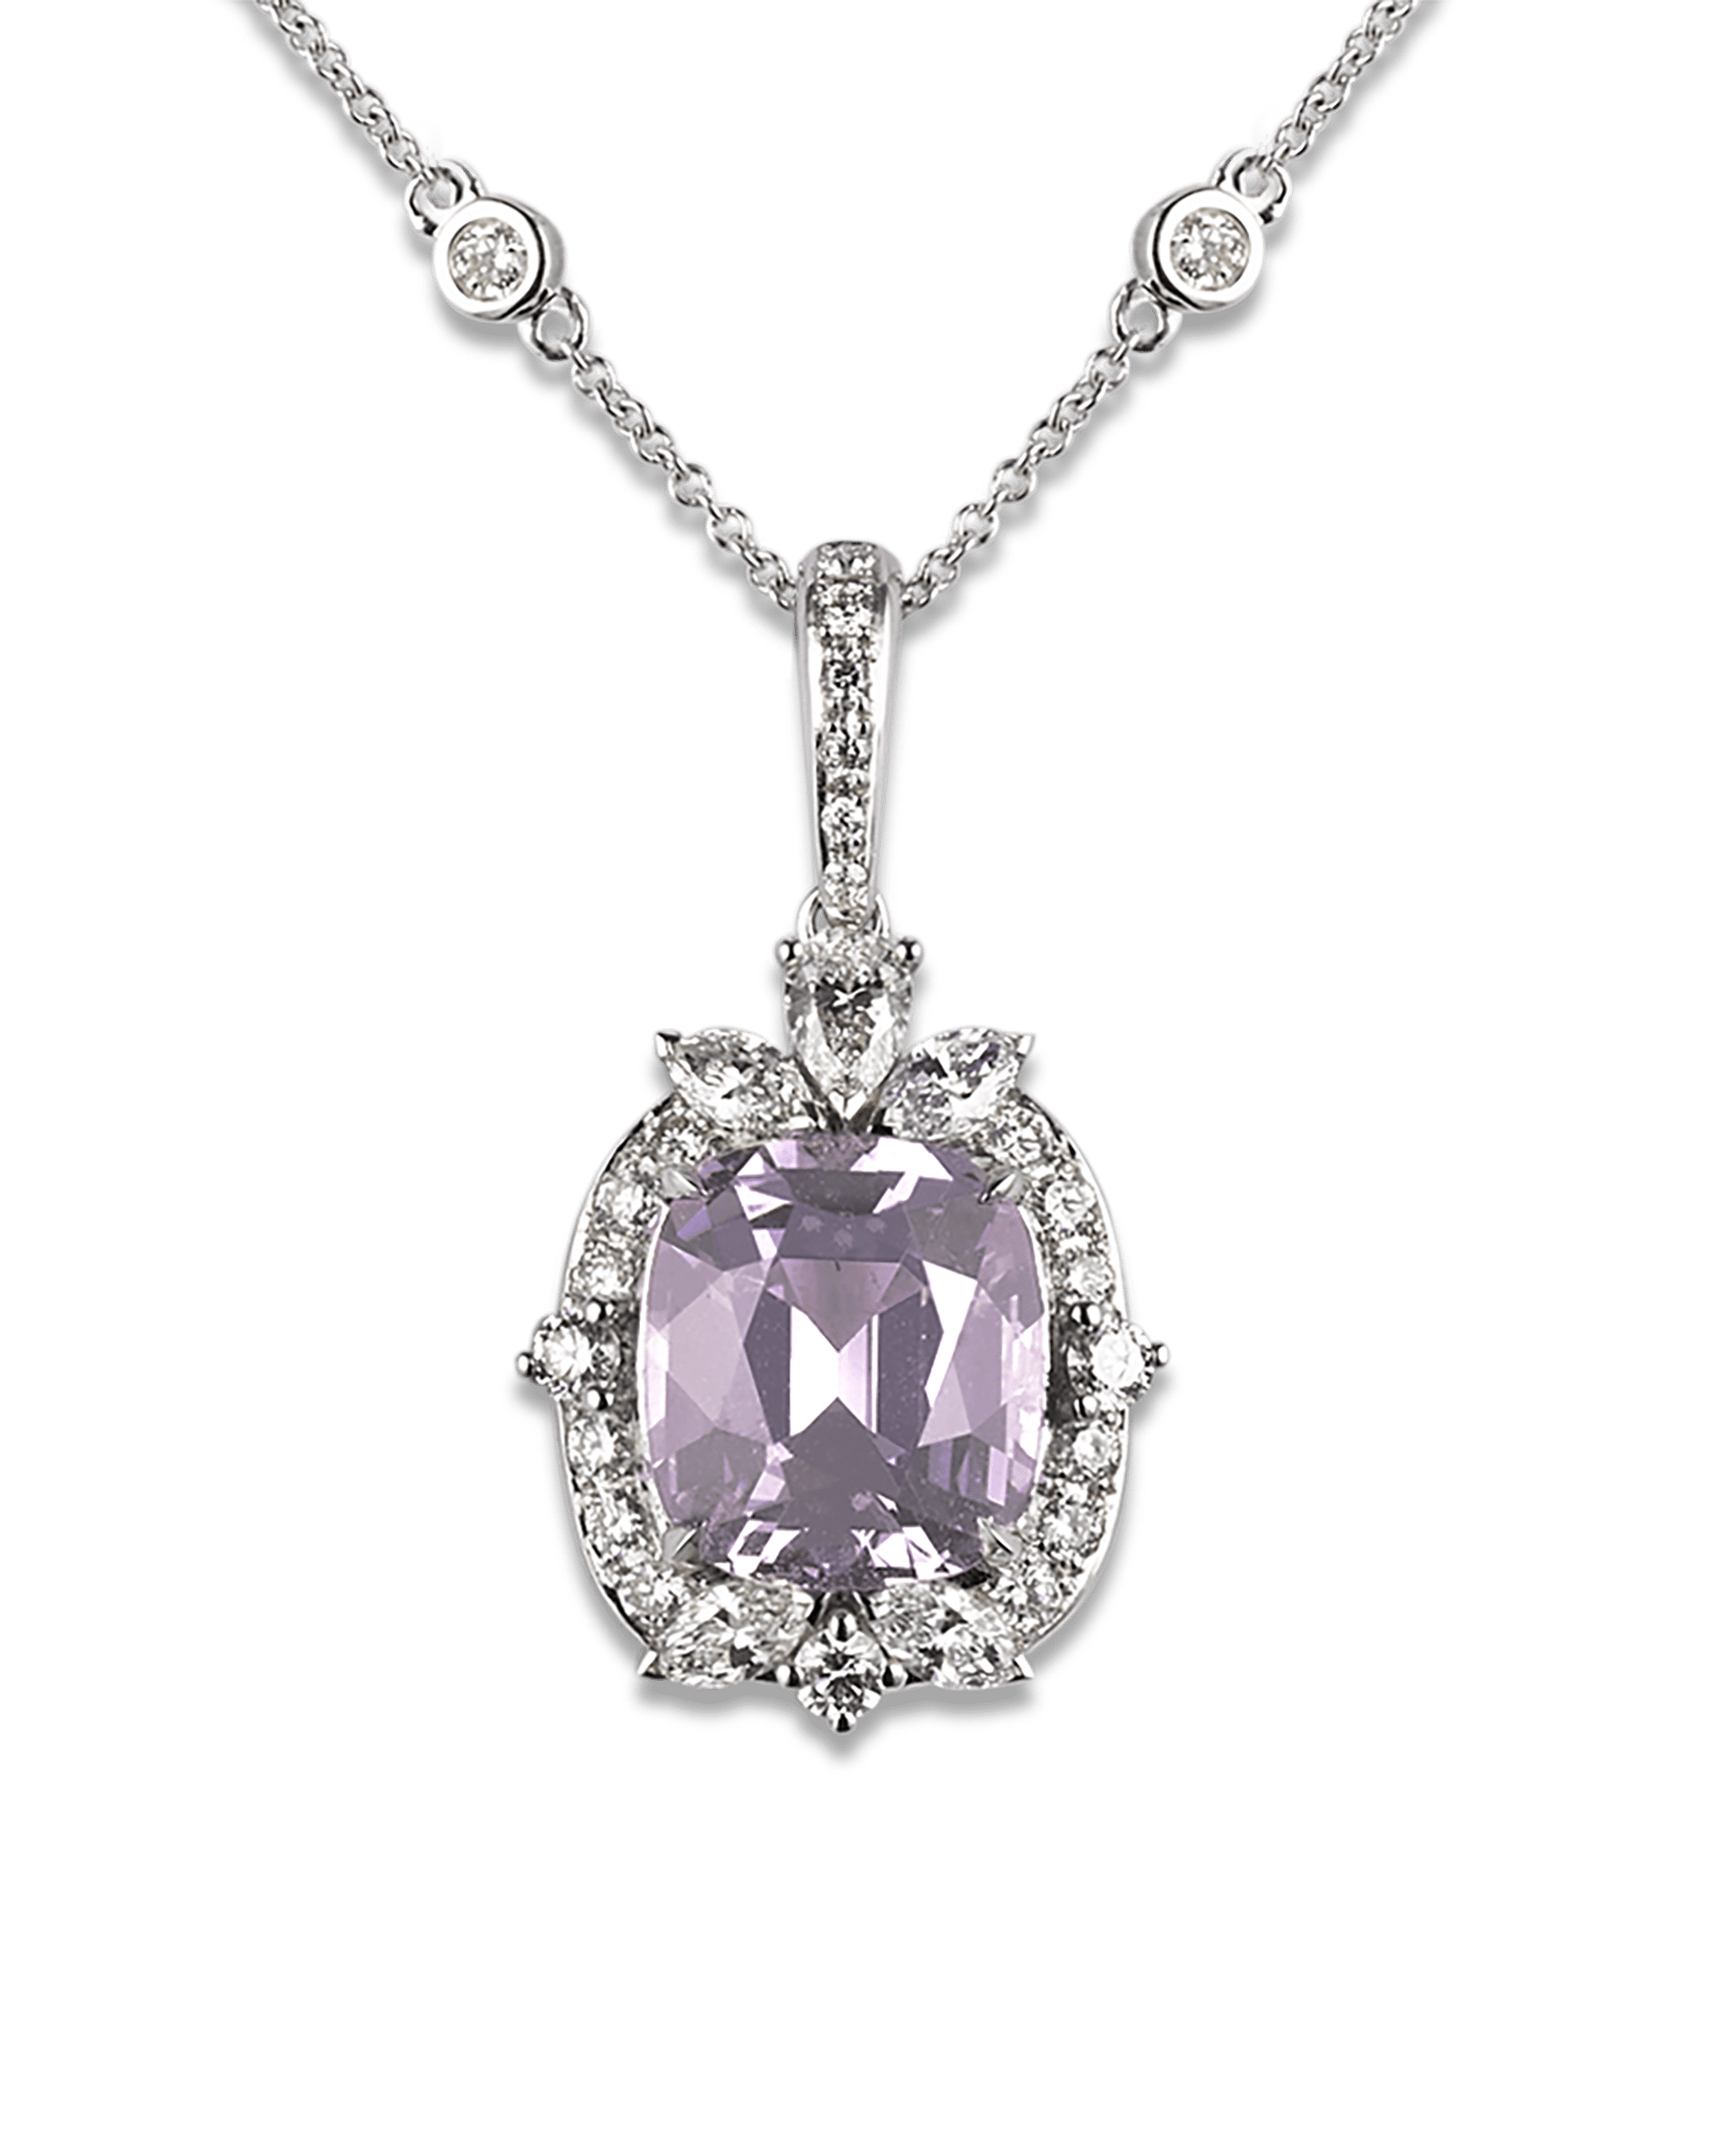 Lavender Spinel Pendant Necklace, 5.51 Carats